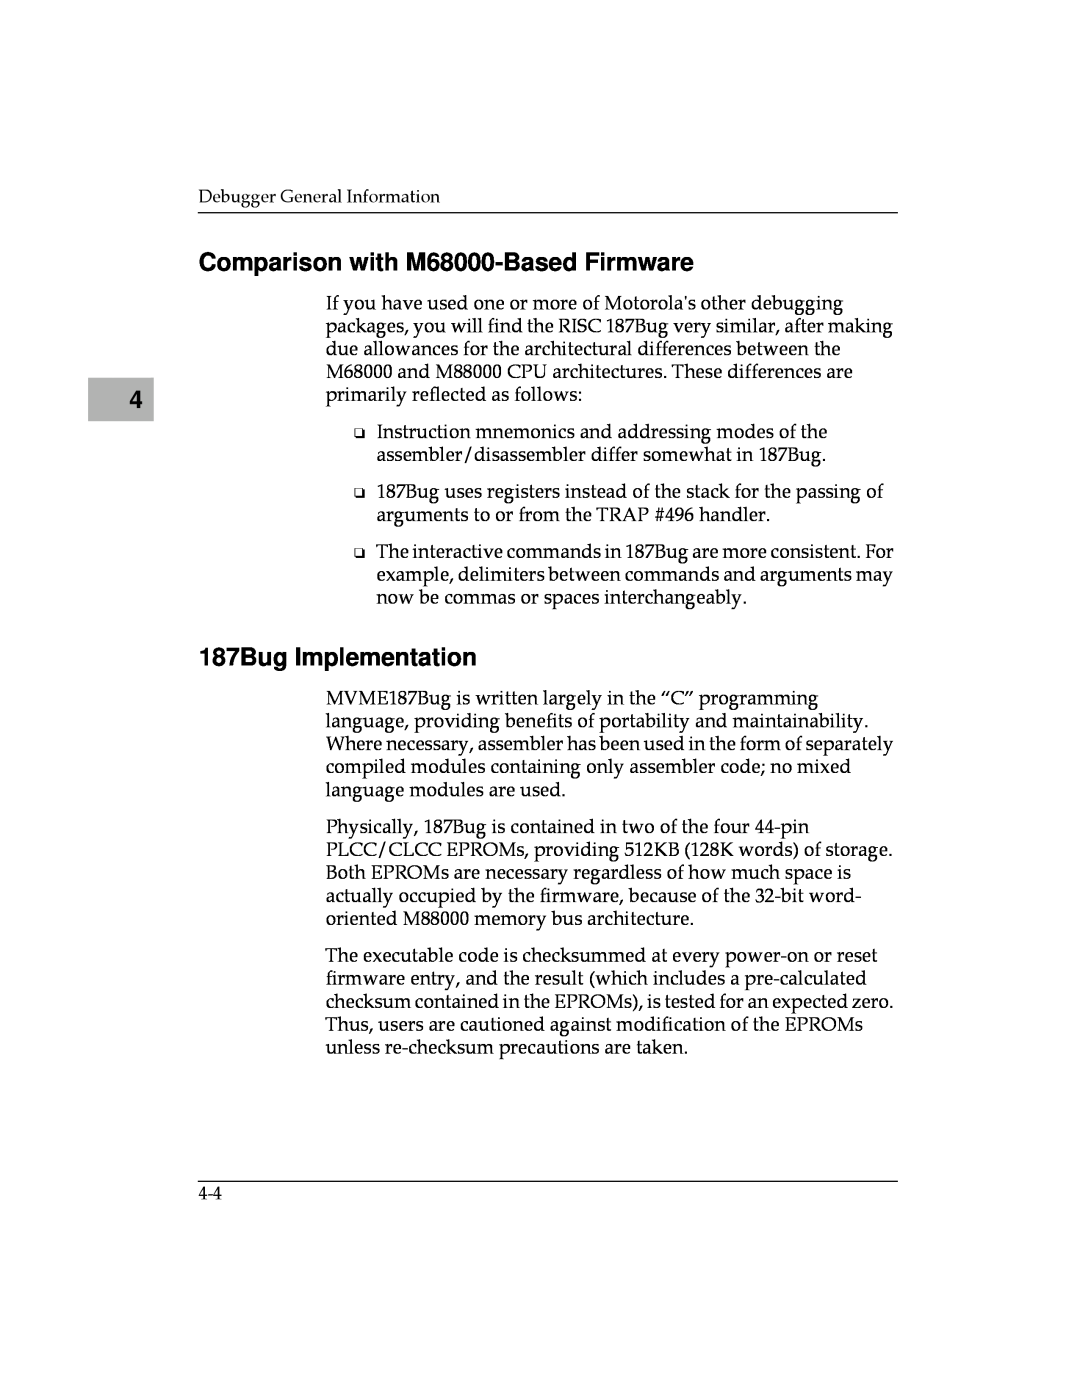 Motorola MVME187 manual Comparison with M68000-Based Firmware, 187Bug Implementation 